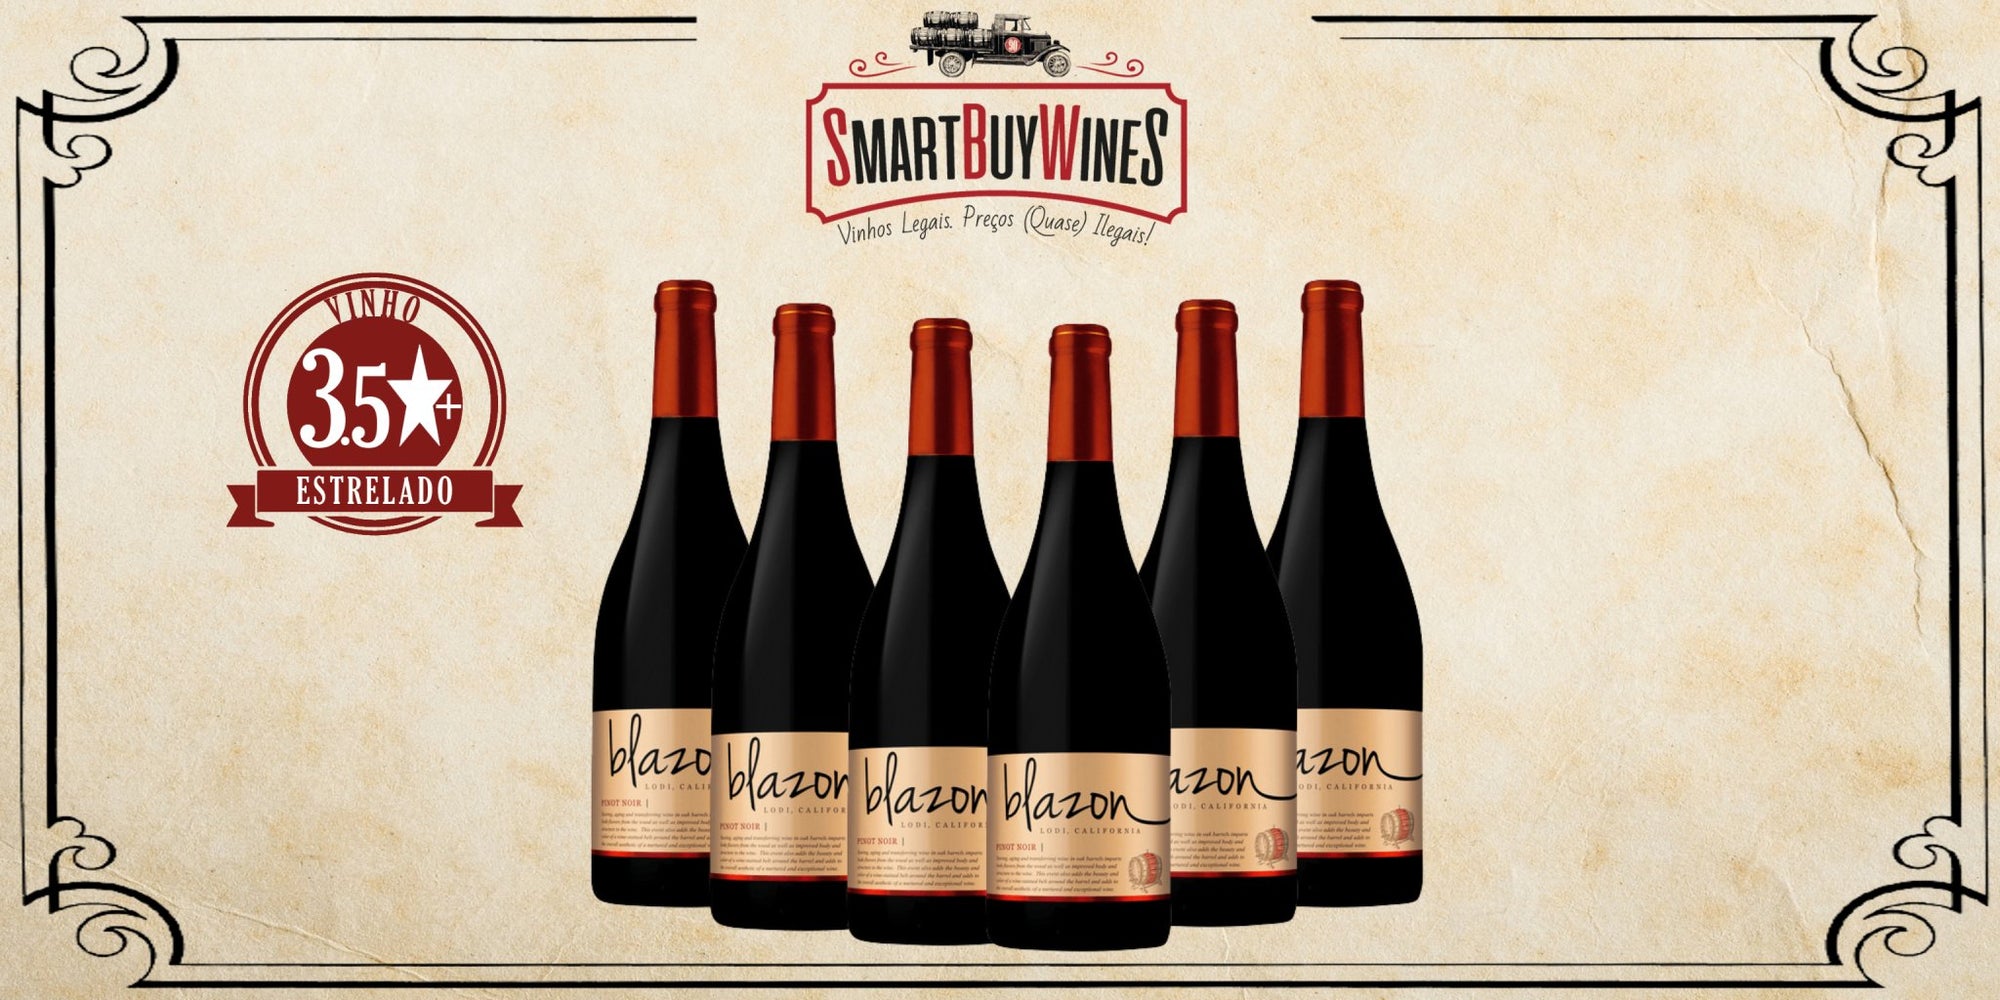 SMARTBOX 6 garrafas - Blazon Pinot Noir, Lodi, California 2018 - SmartBuyWines.com.br